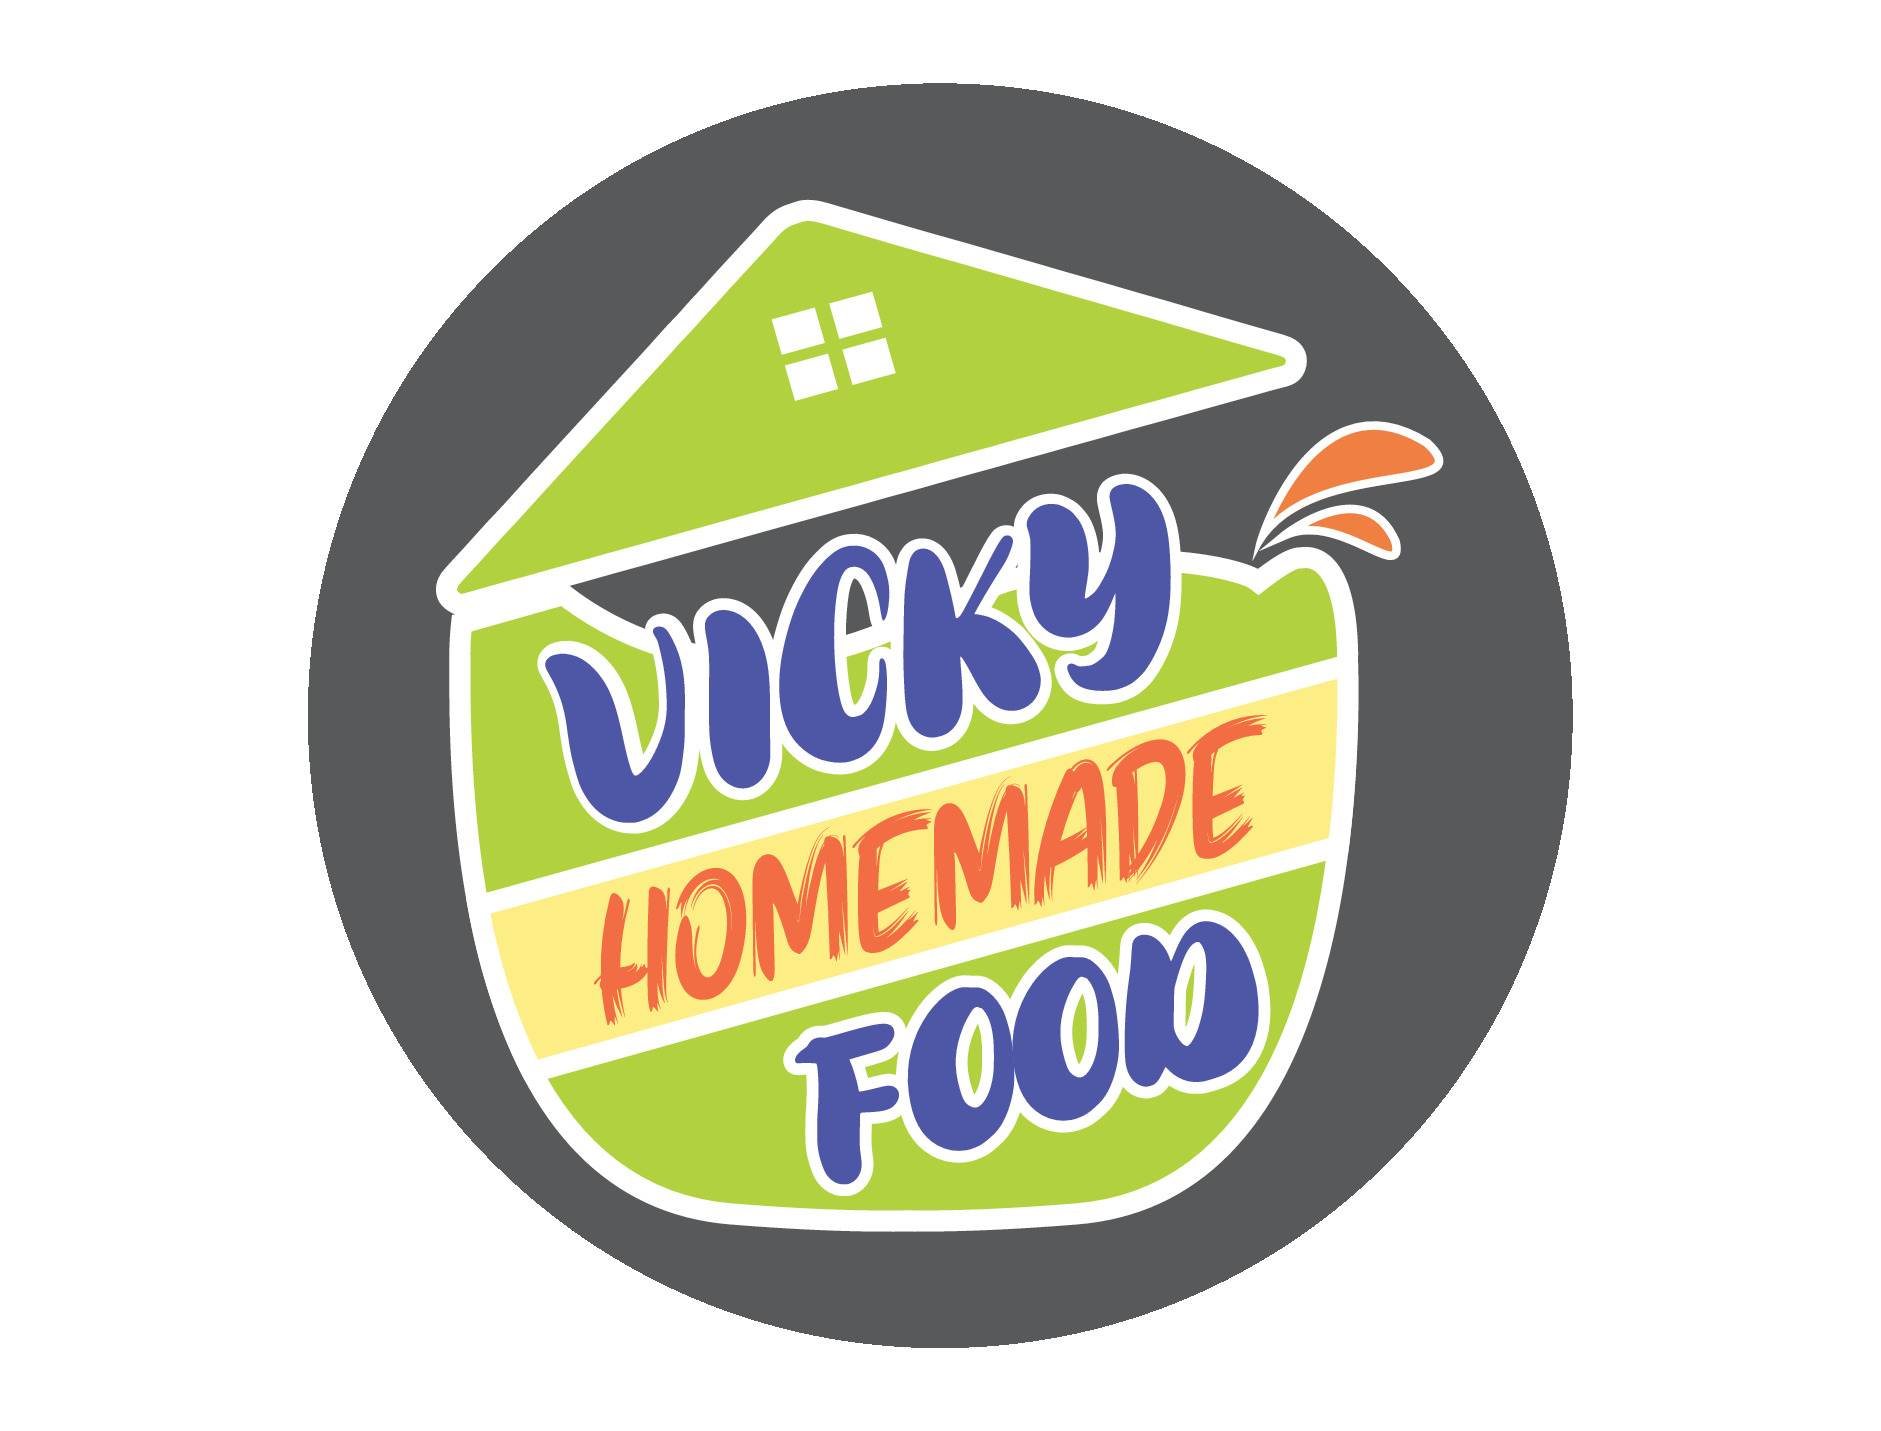 Vicky Homemade Food